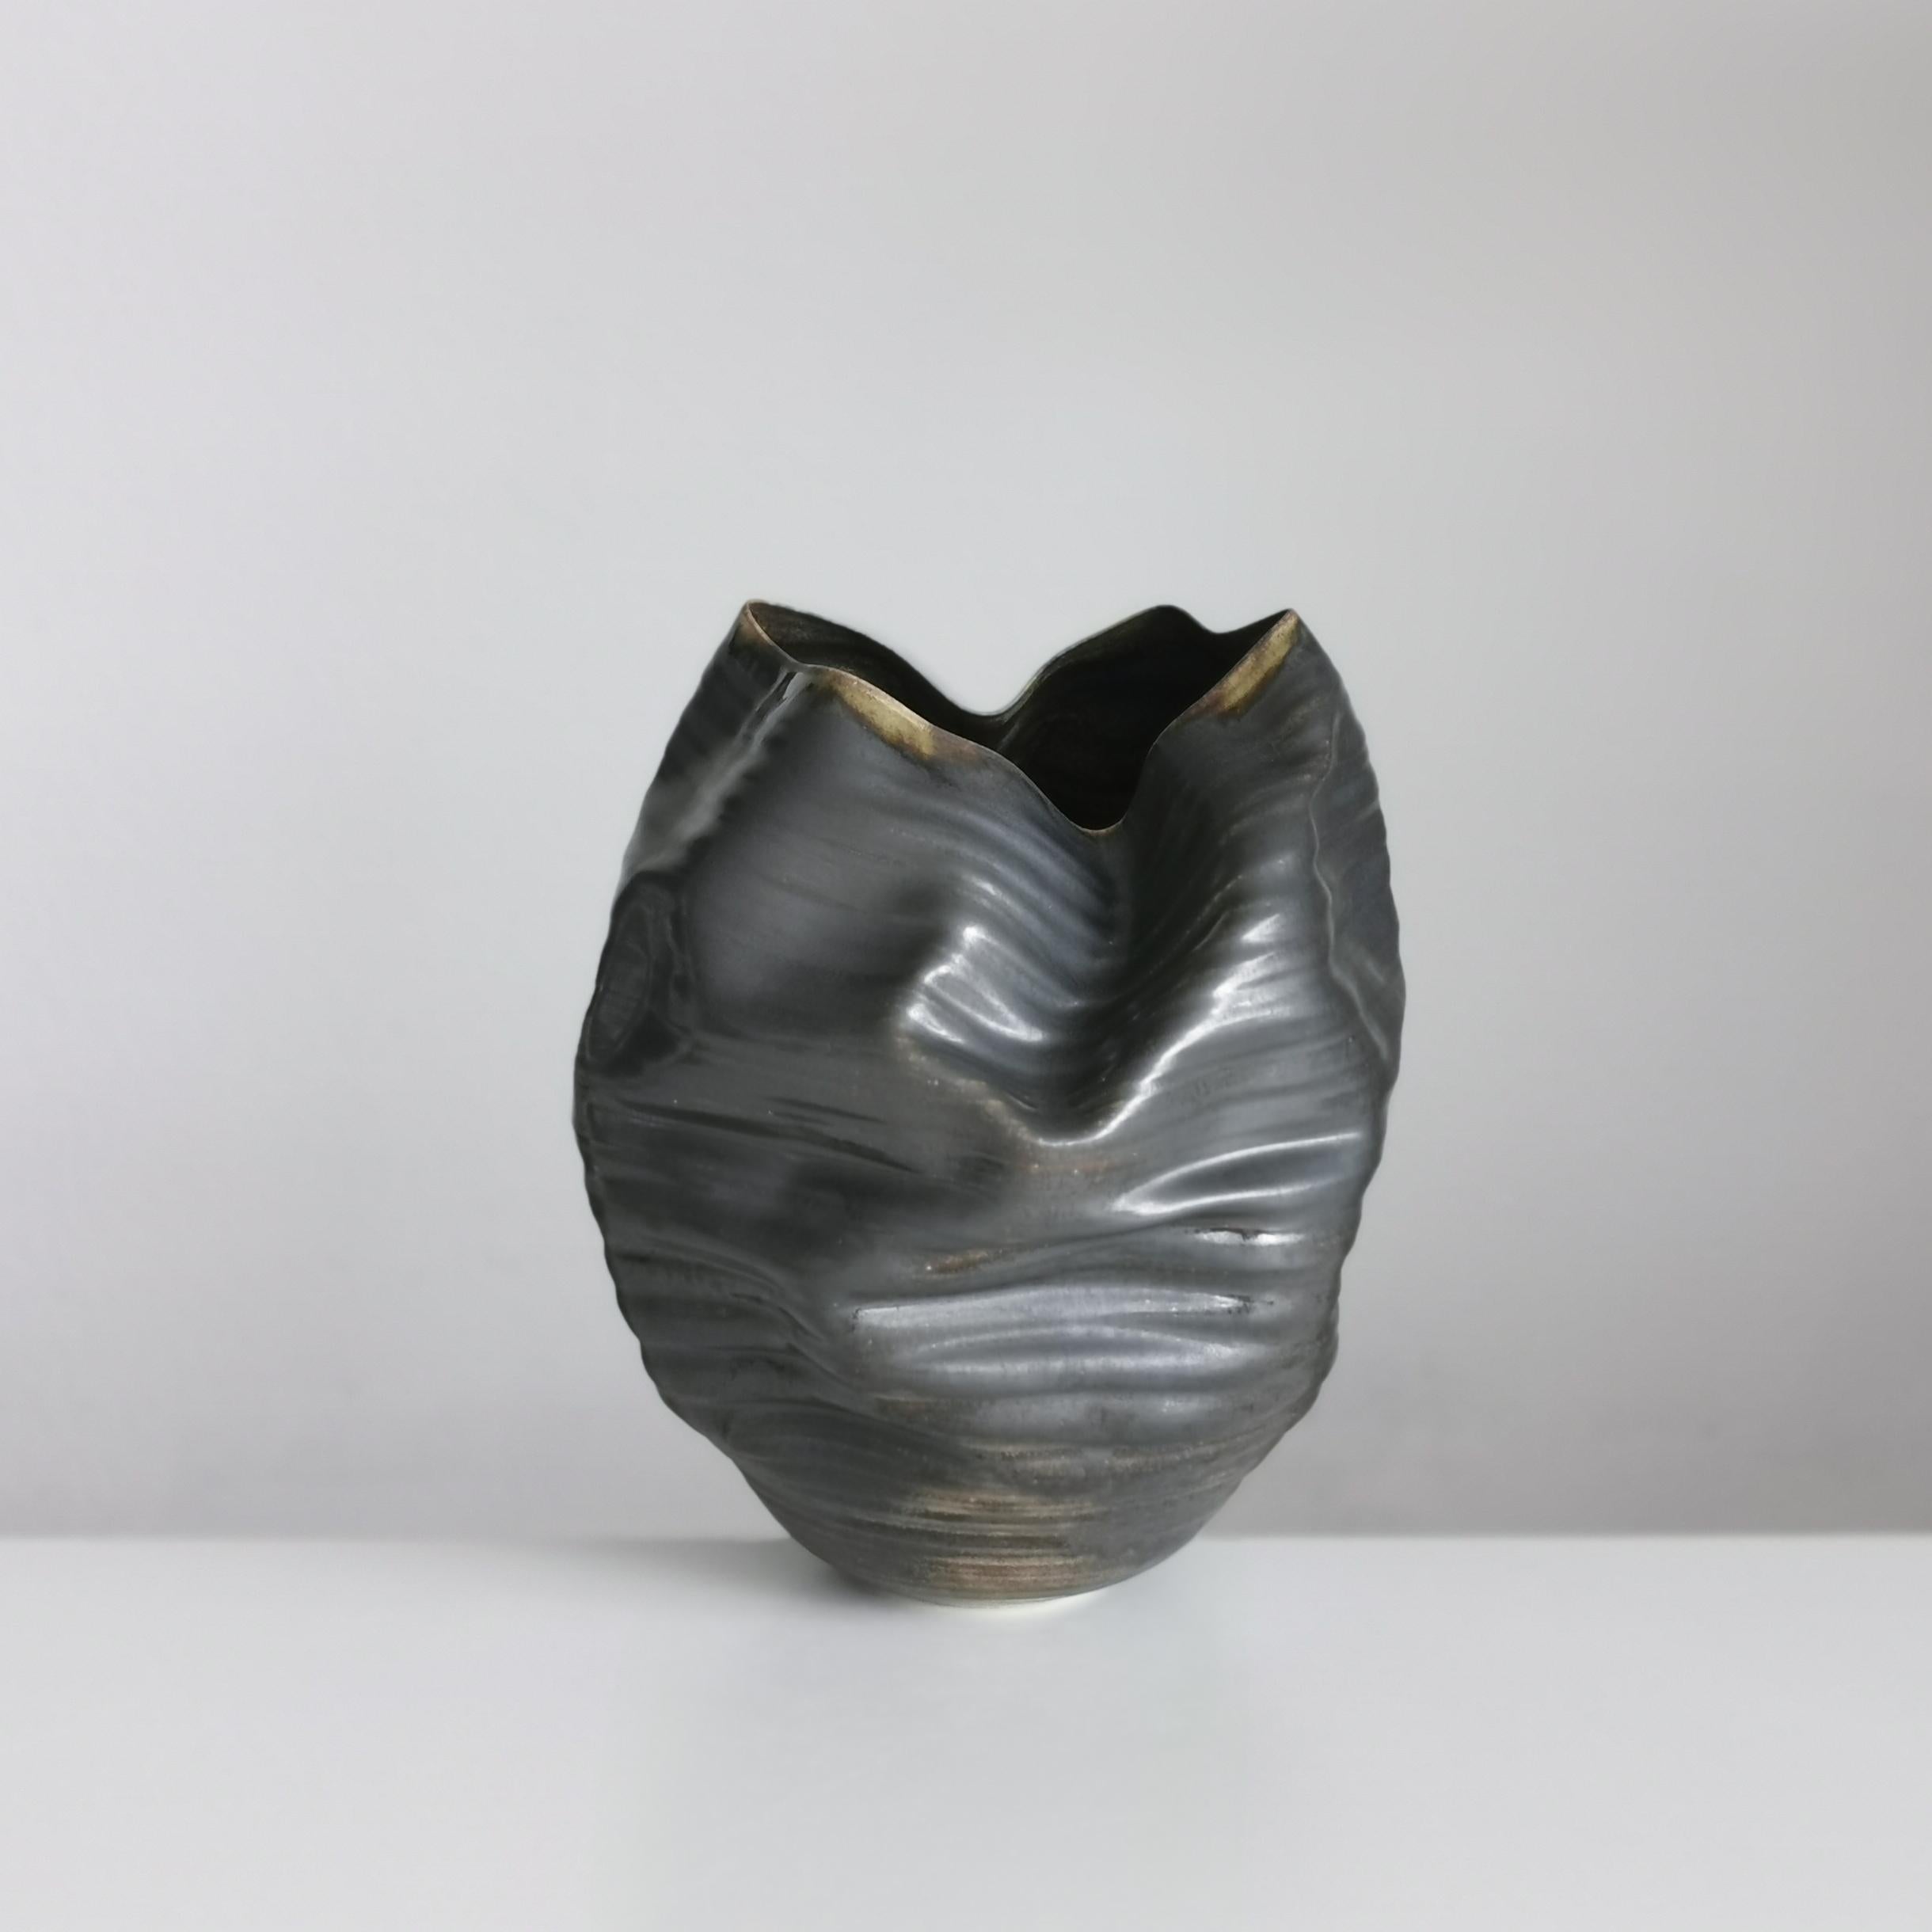 Contemporary Unique Ceramic Sculpture Vessel N.58, Black Ribbed Undulating Form, Objet d'Art